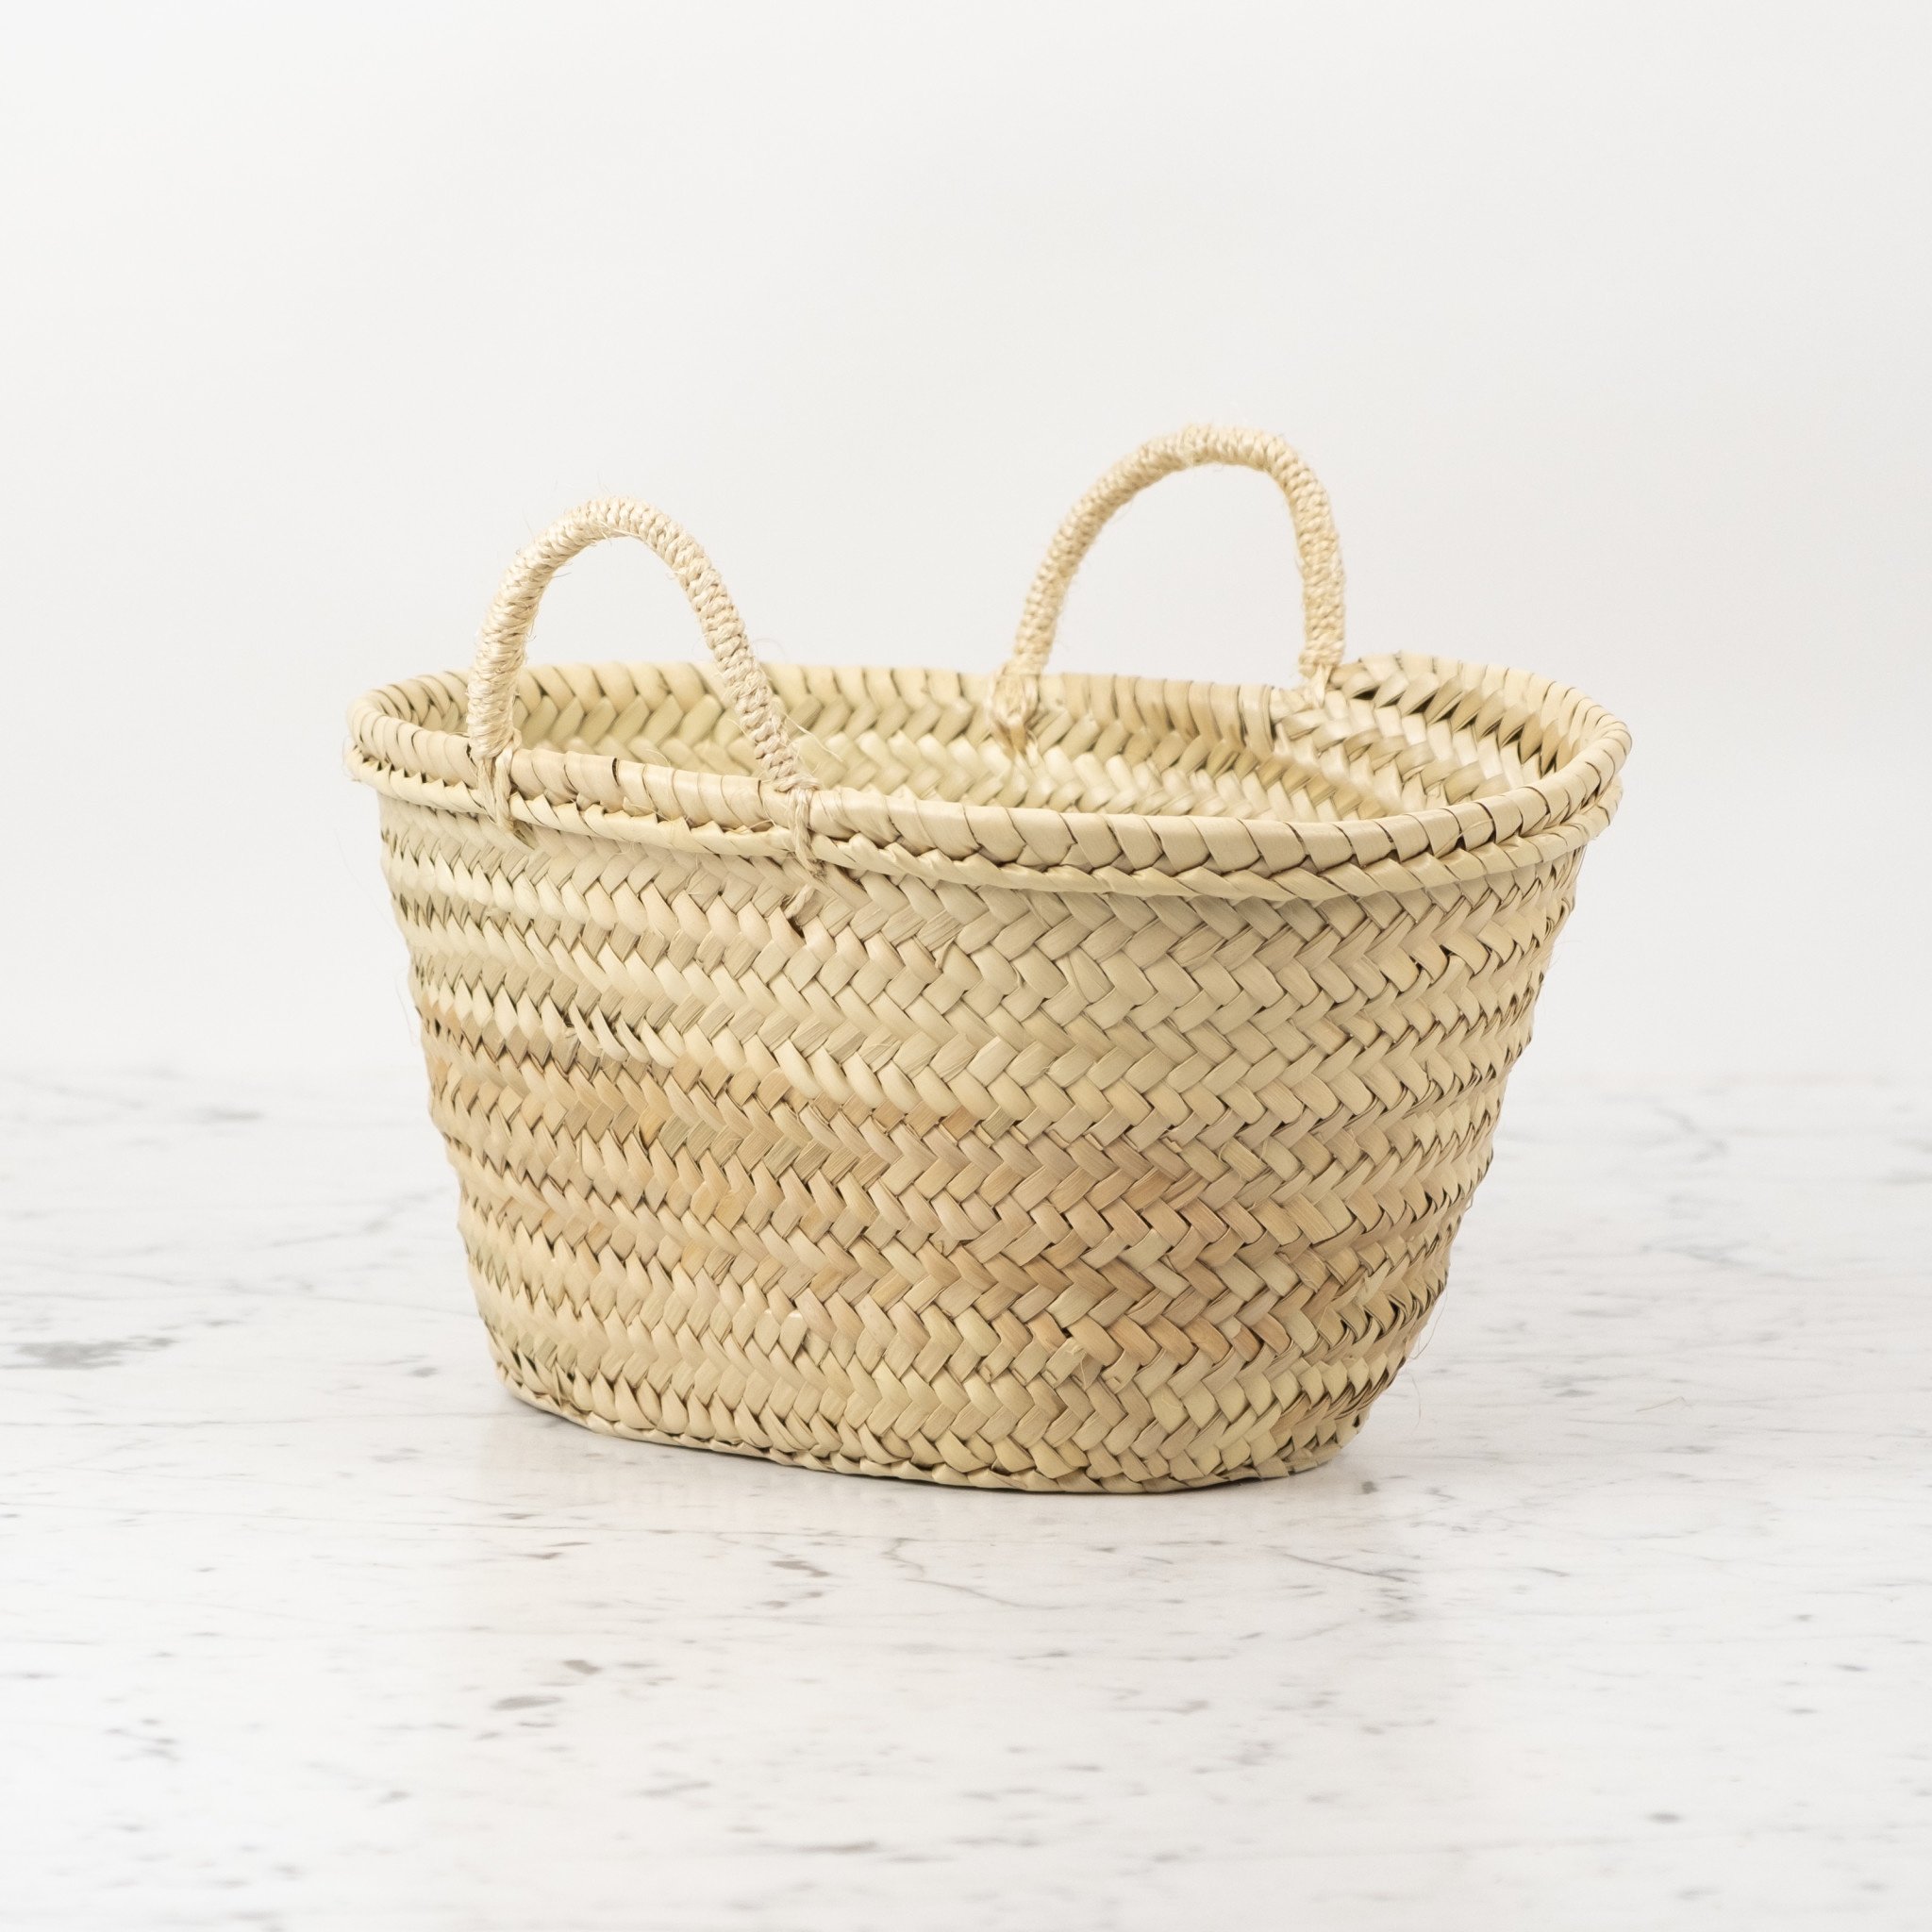 Straw Bag - Miami French Market Basket - Small